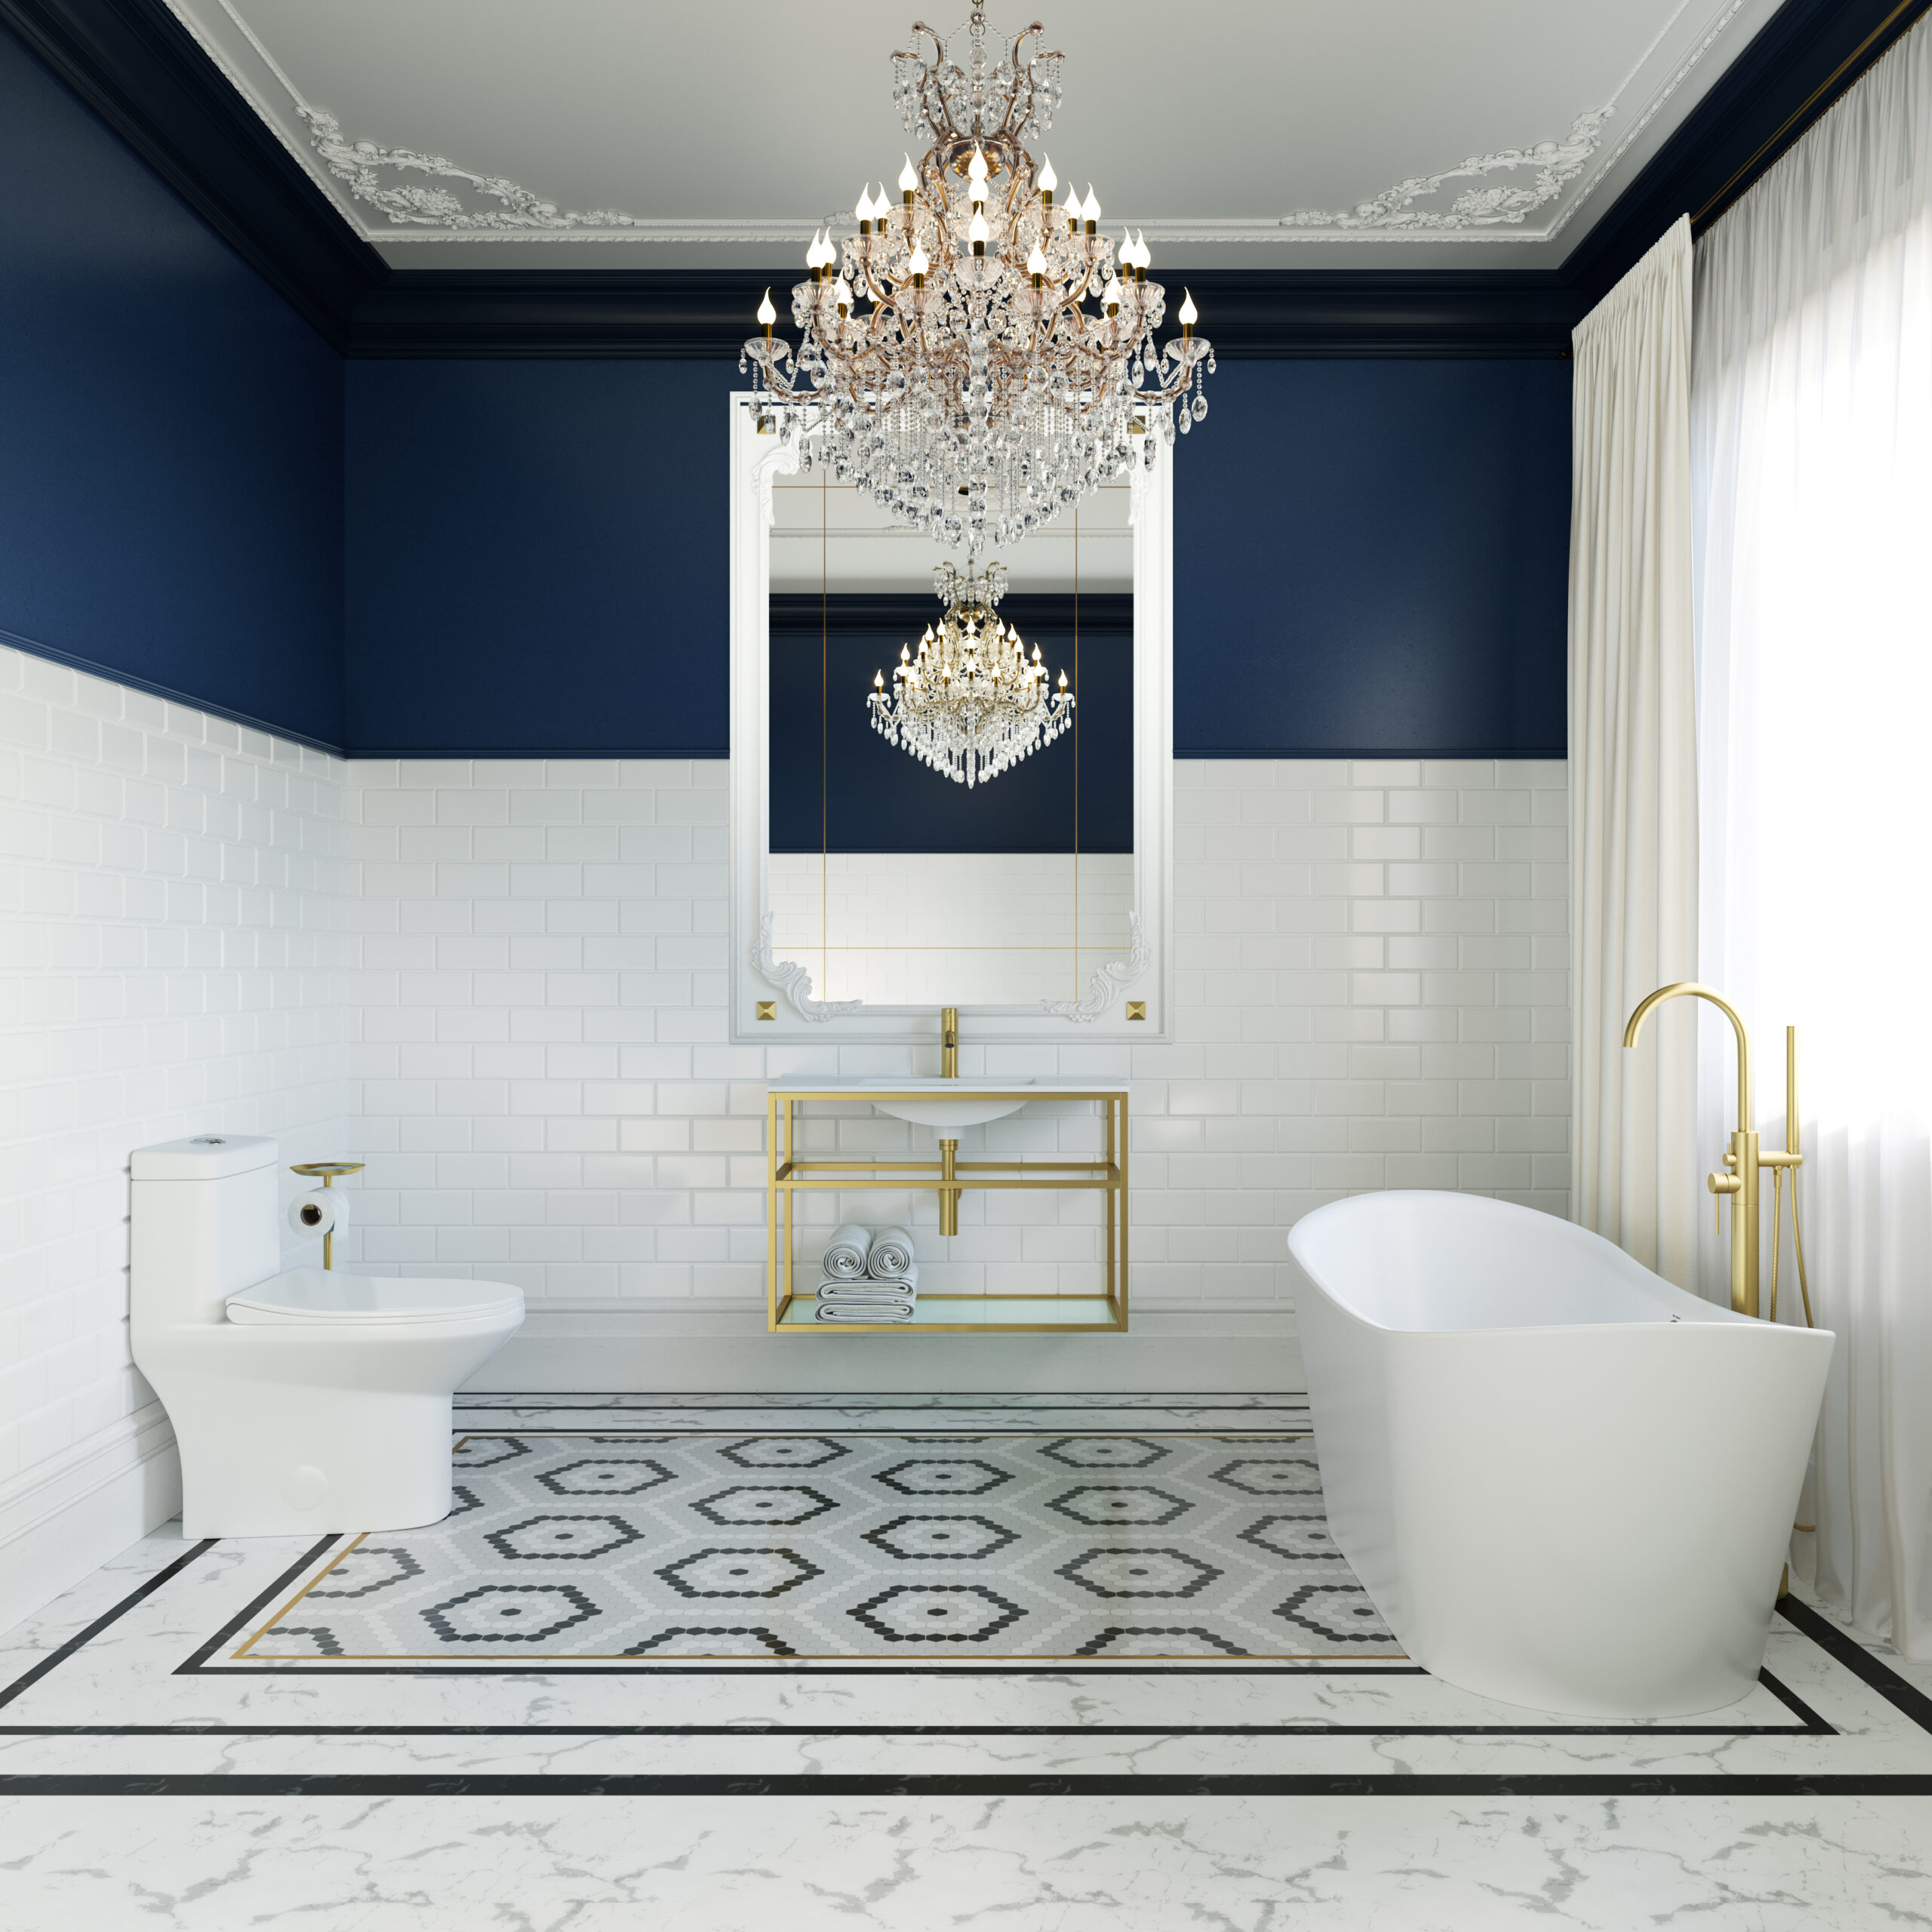 glamorous bathroom 3D rendering visualization cgi bathroom fixtures